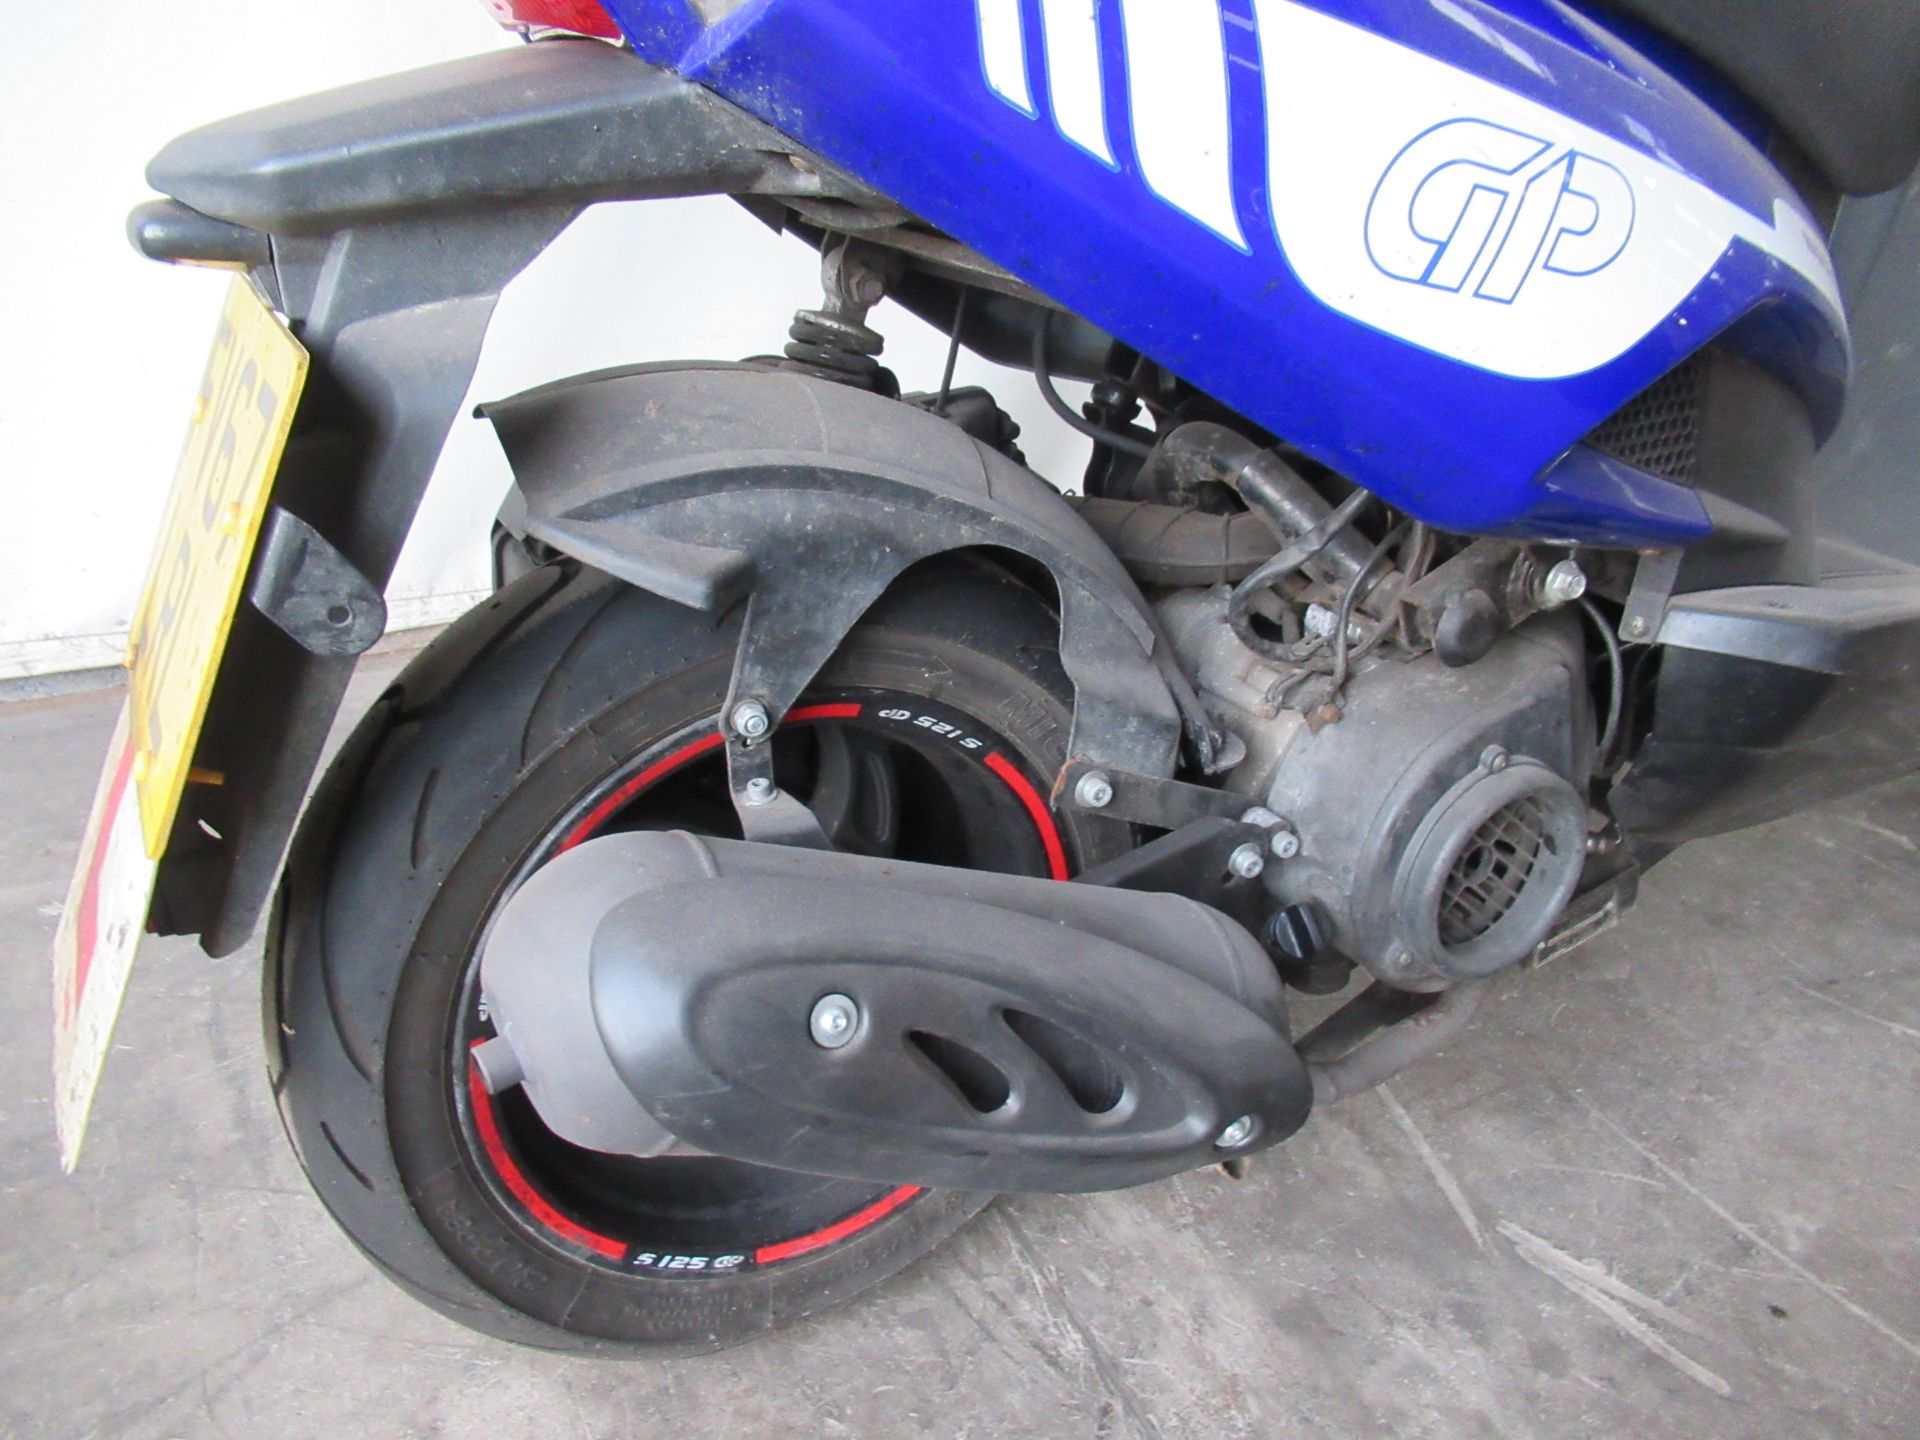 3x Motorini GP125i motorbikes - Image 3 of 30